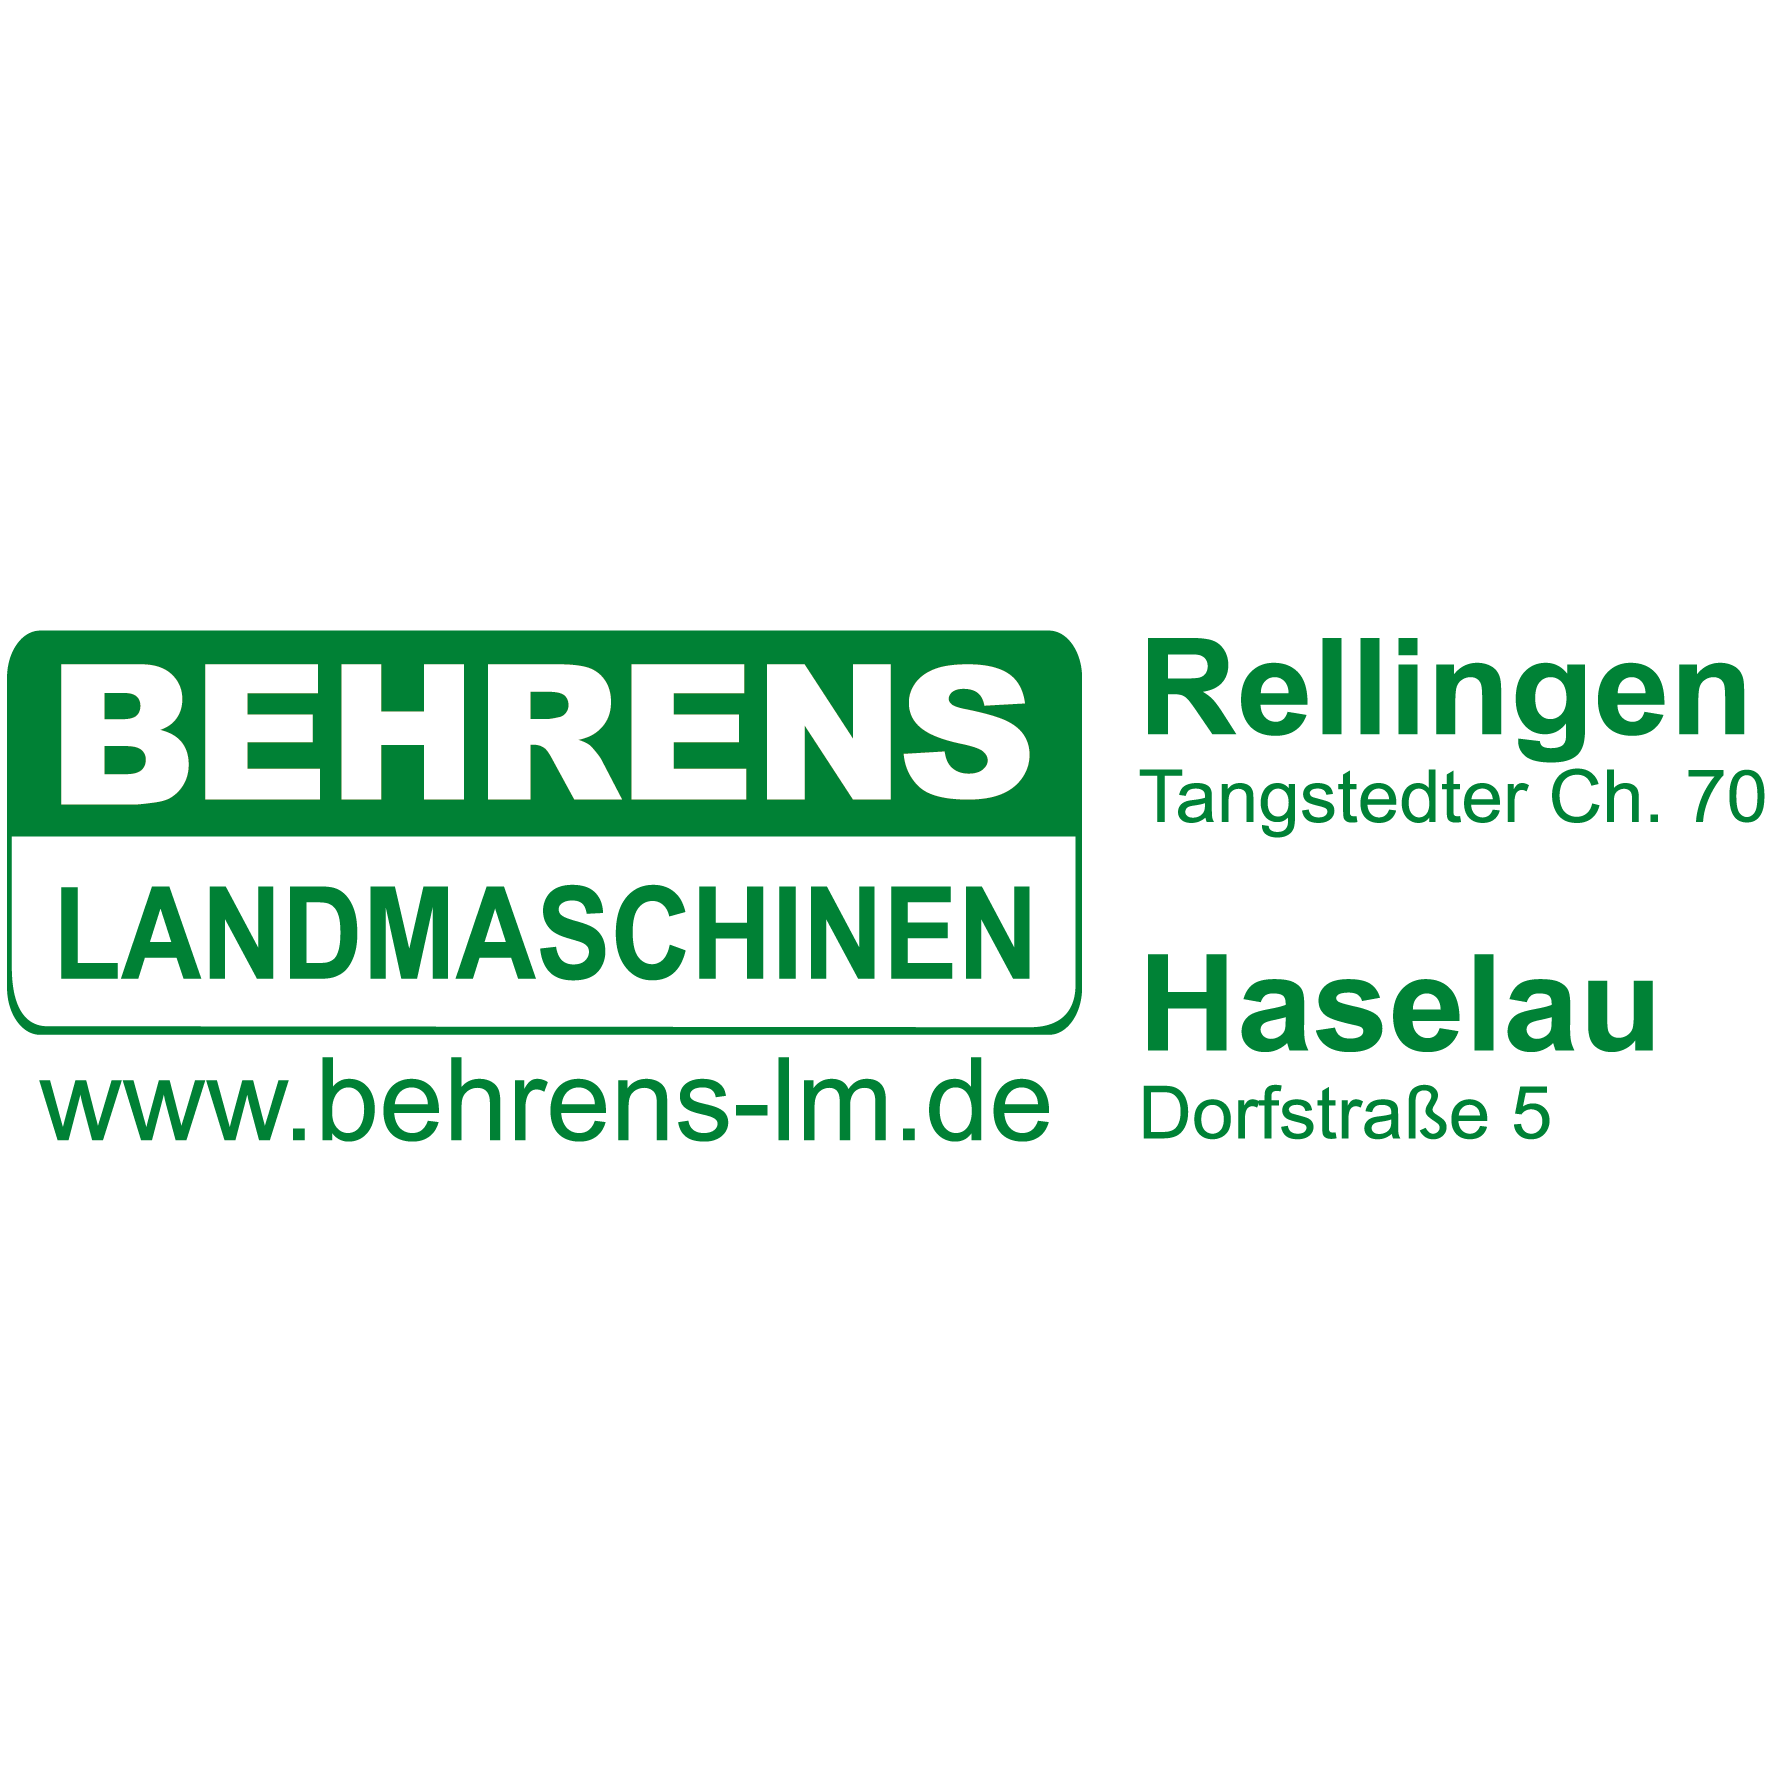 Behrens Landmaschinen in Rellingen - Logo